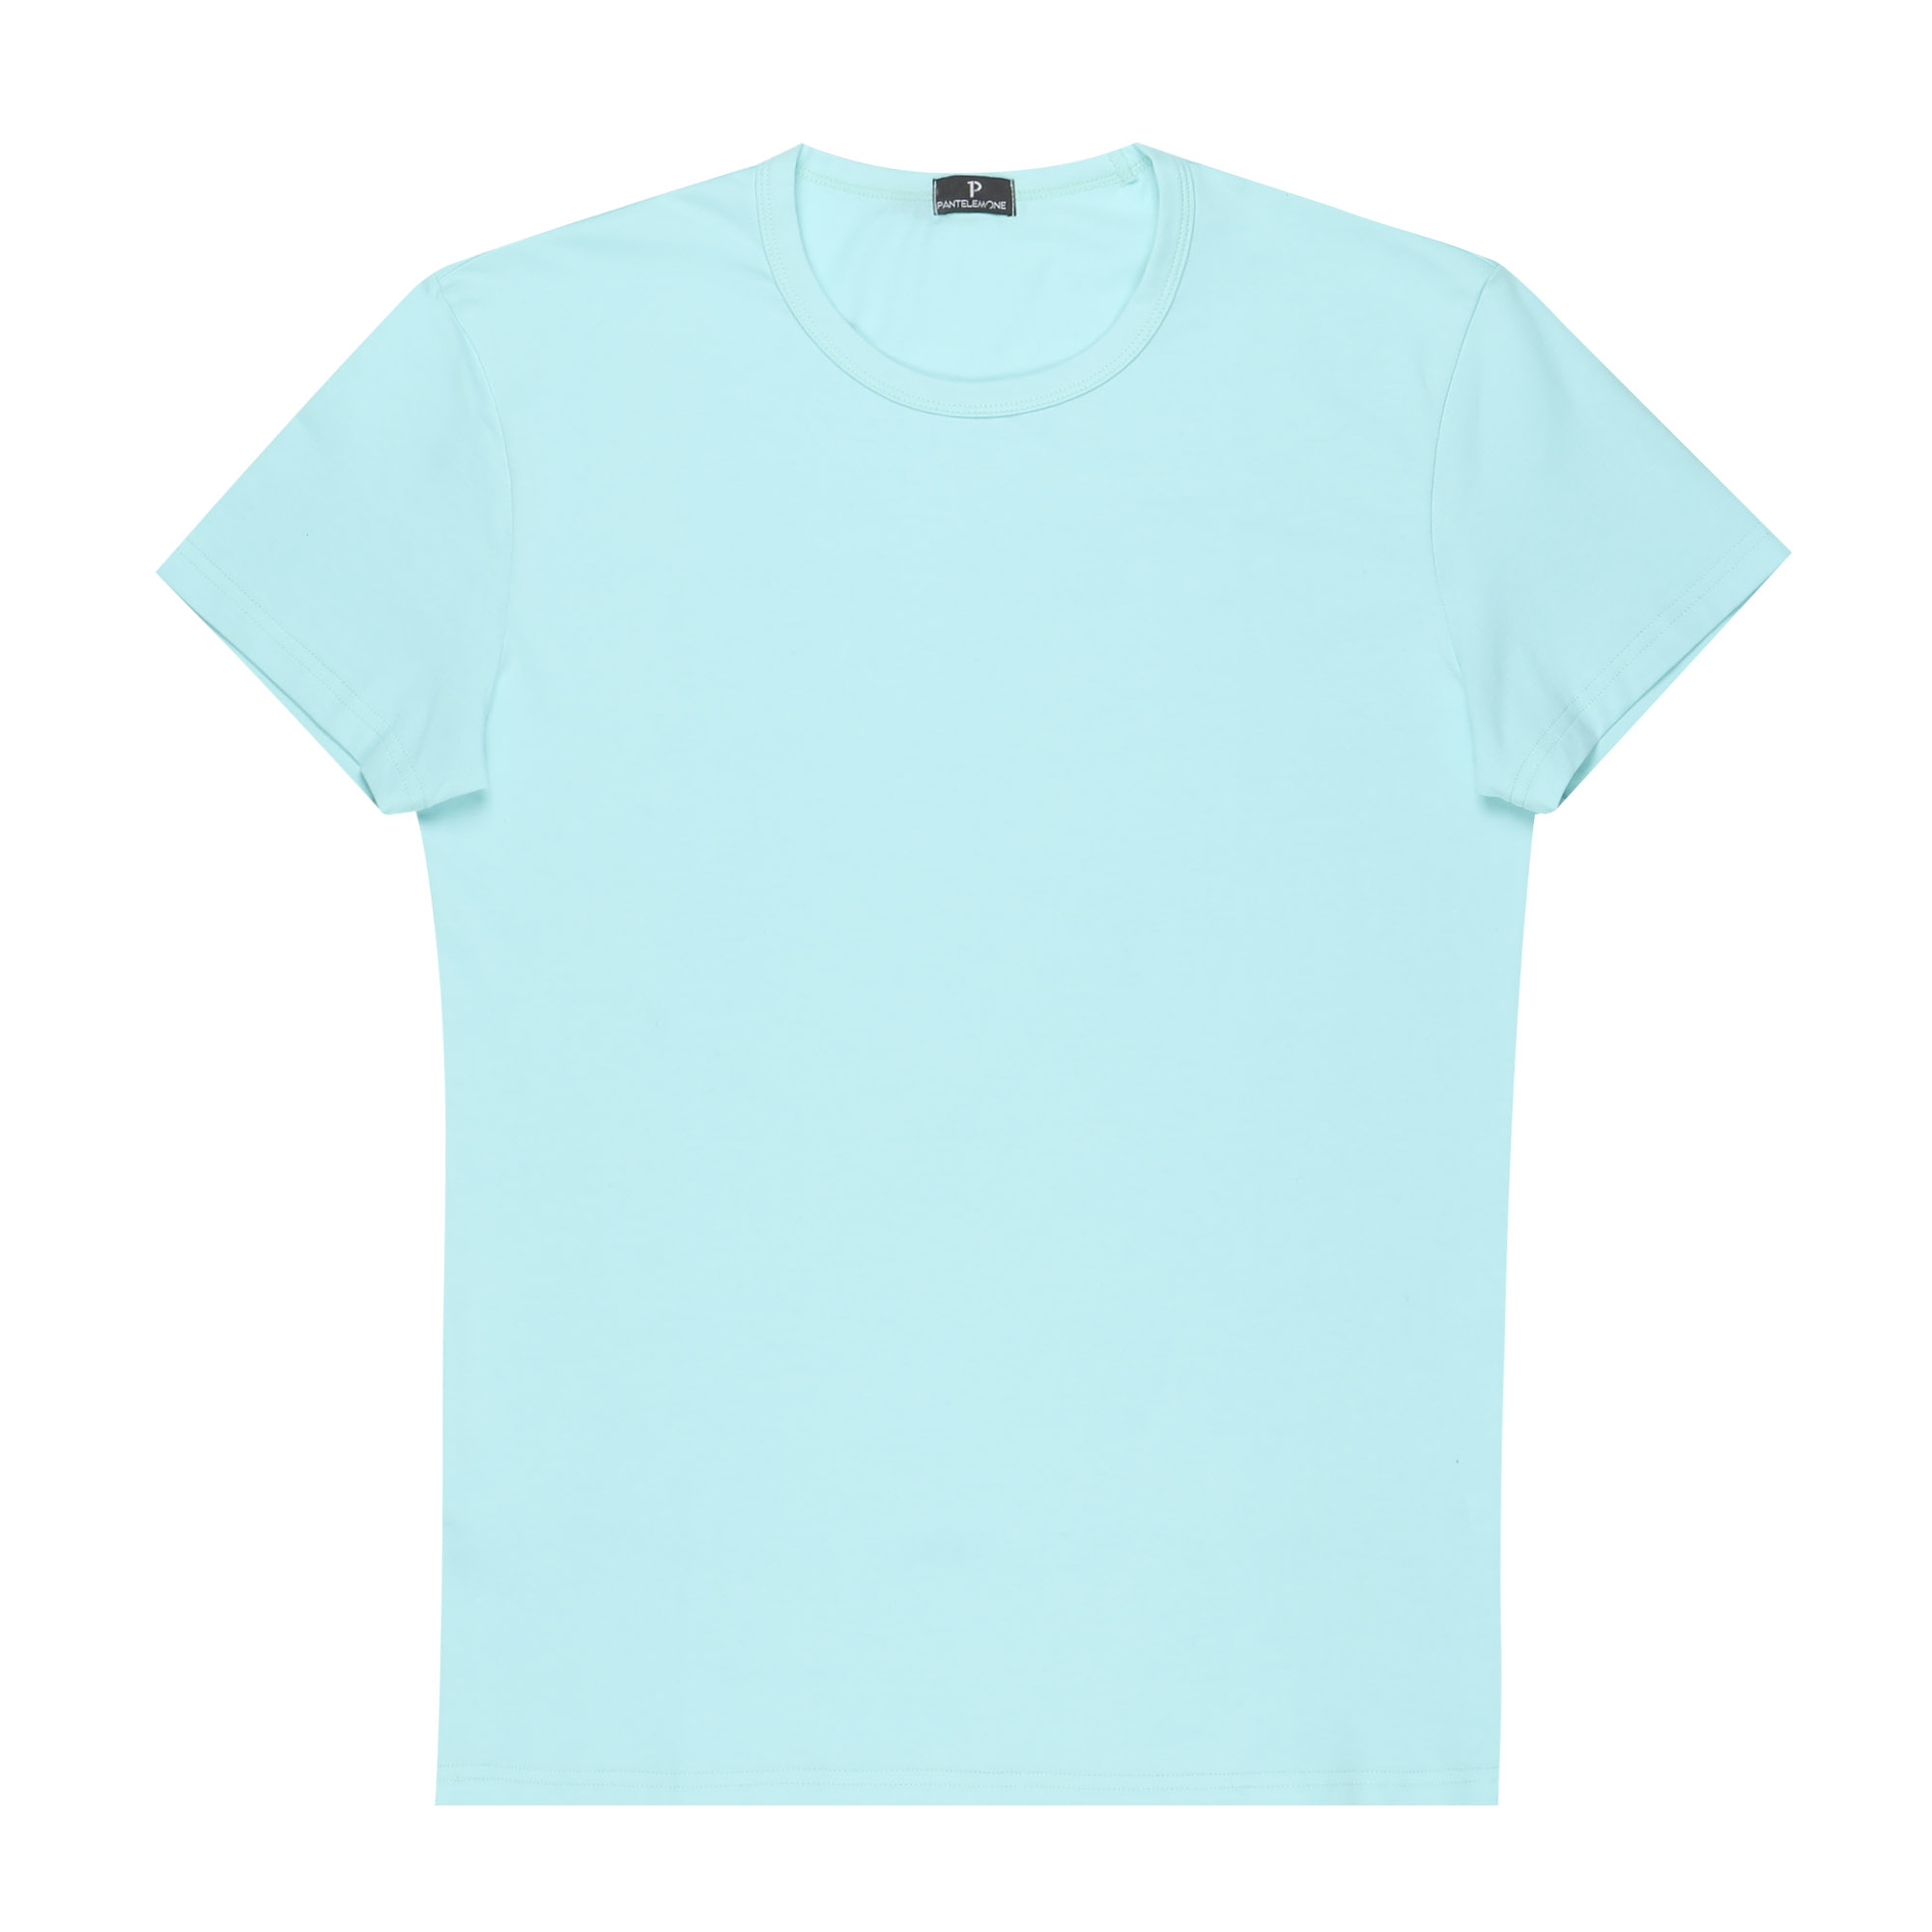 Мужская футболка Pantelemone MF-914 54 ментоловая, цвет ментоловый, размер 54 - фото 1